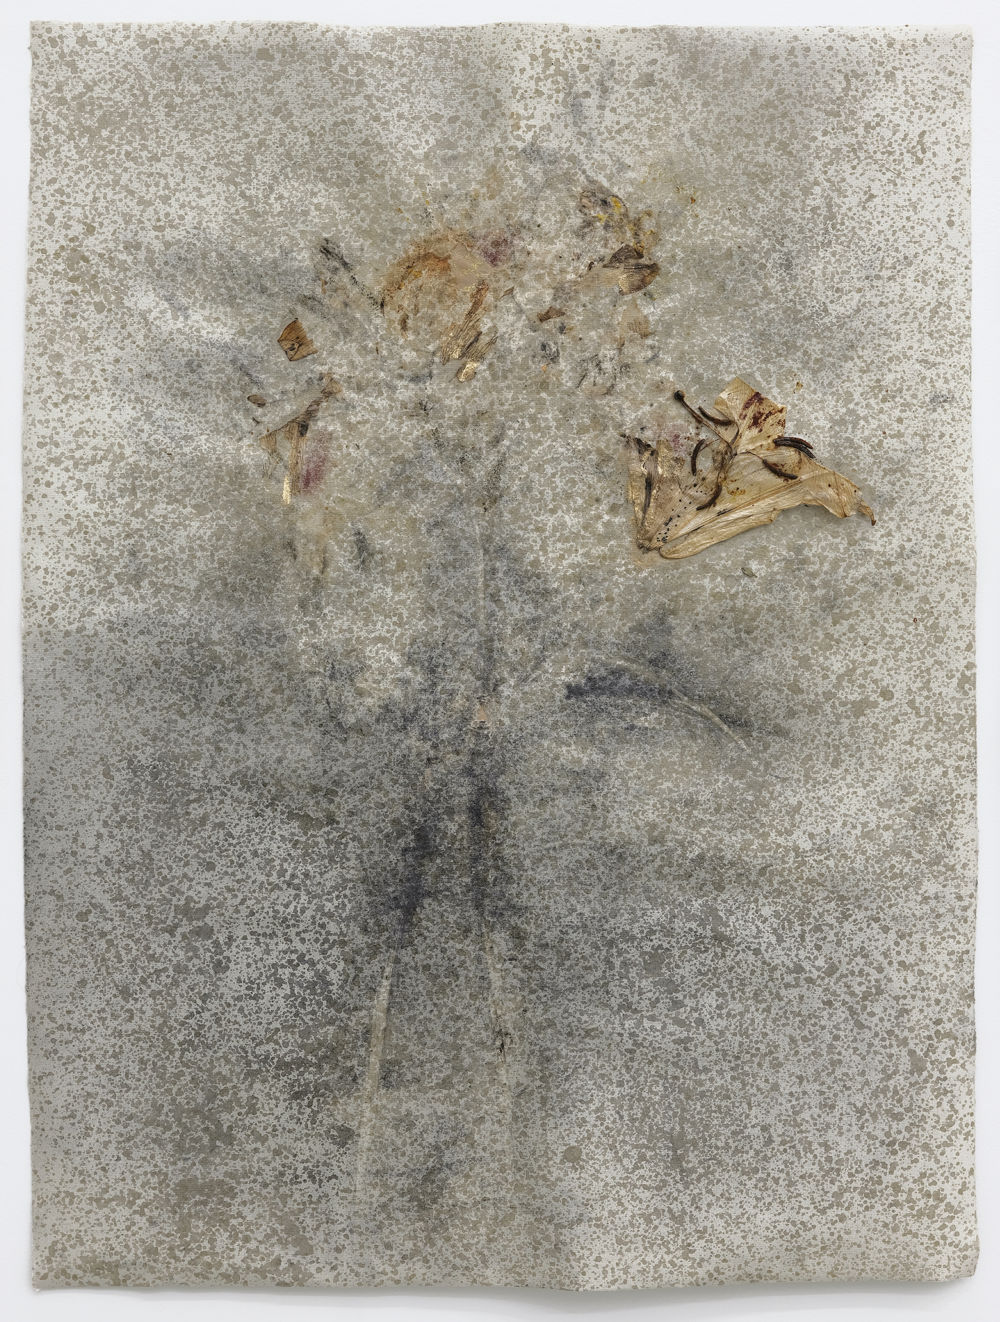 Rochelle Goldberg, Bouquet, insufficient (detail), 2021, pressed flower, graphite, pastel, bronze dust, shellac, on paper, 196 x 19 in. (498 x 47 cm) by 